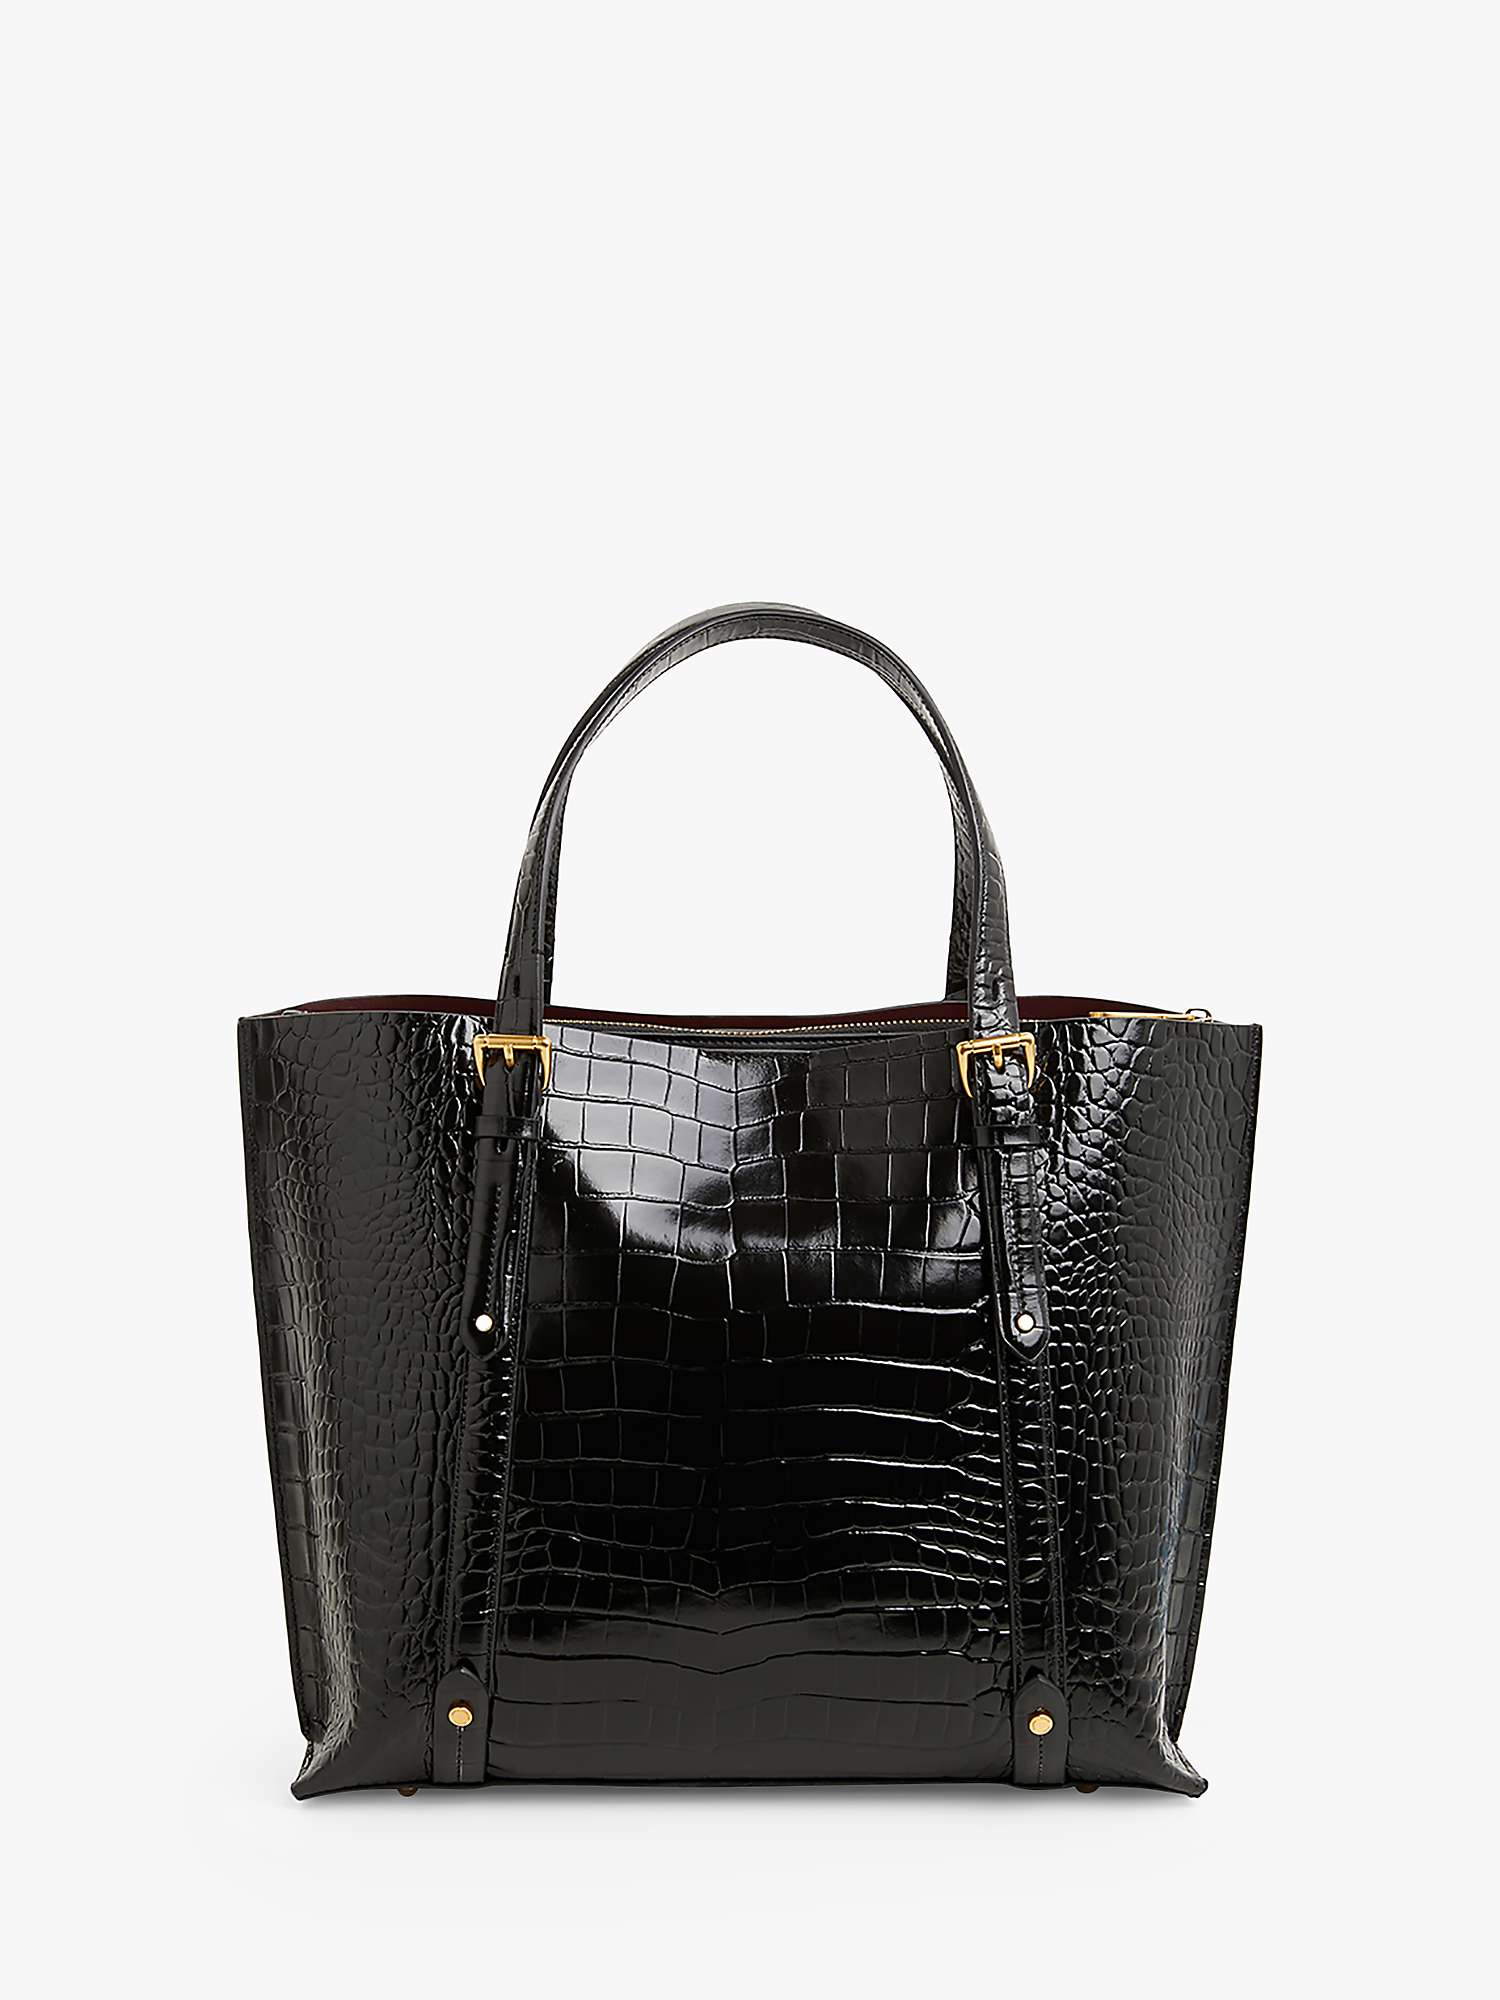 Buy Jasper Conran London Alexis Croc Leather Grab Tote Bag Online at johnlewis.com